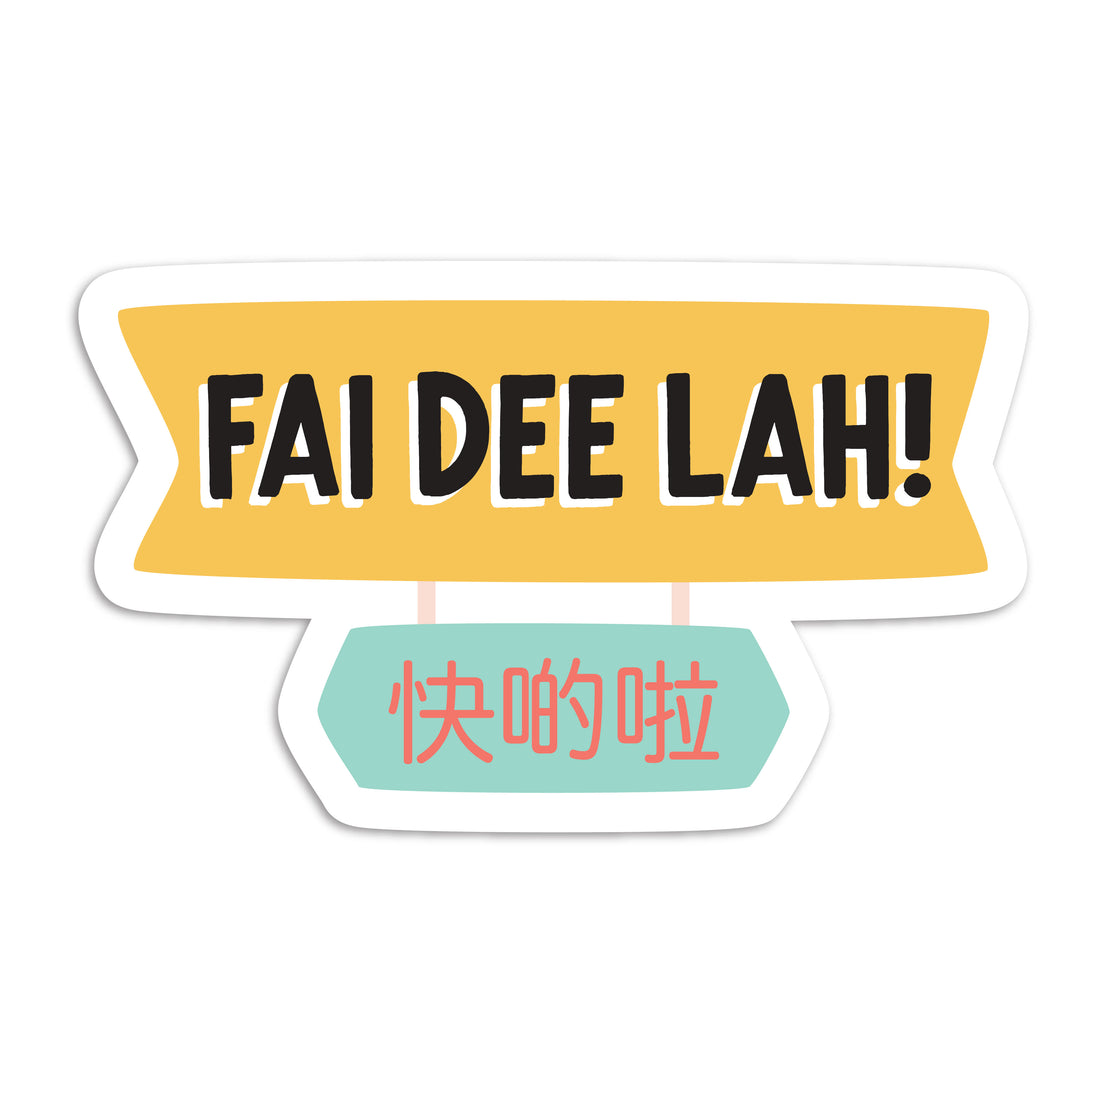 Fai dee lah (快啲啦) vinyl sticker by I&